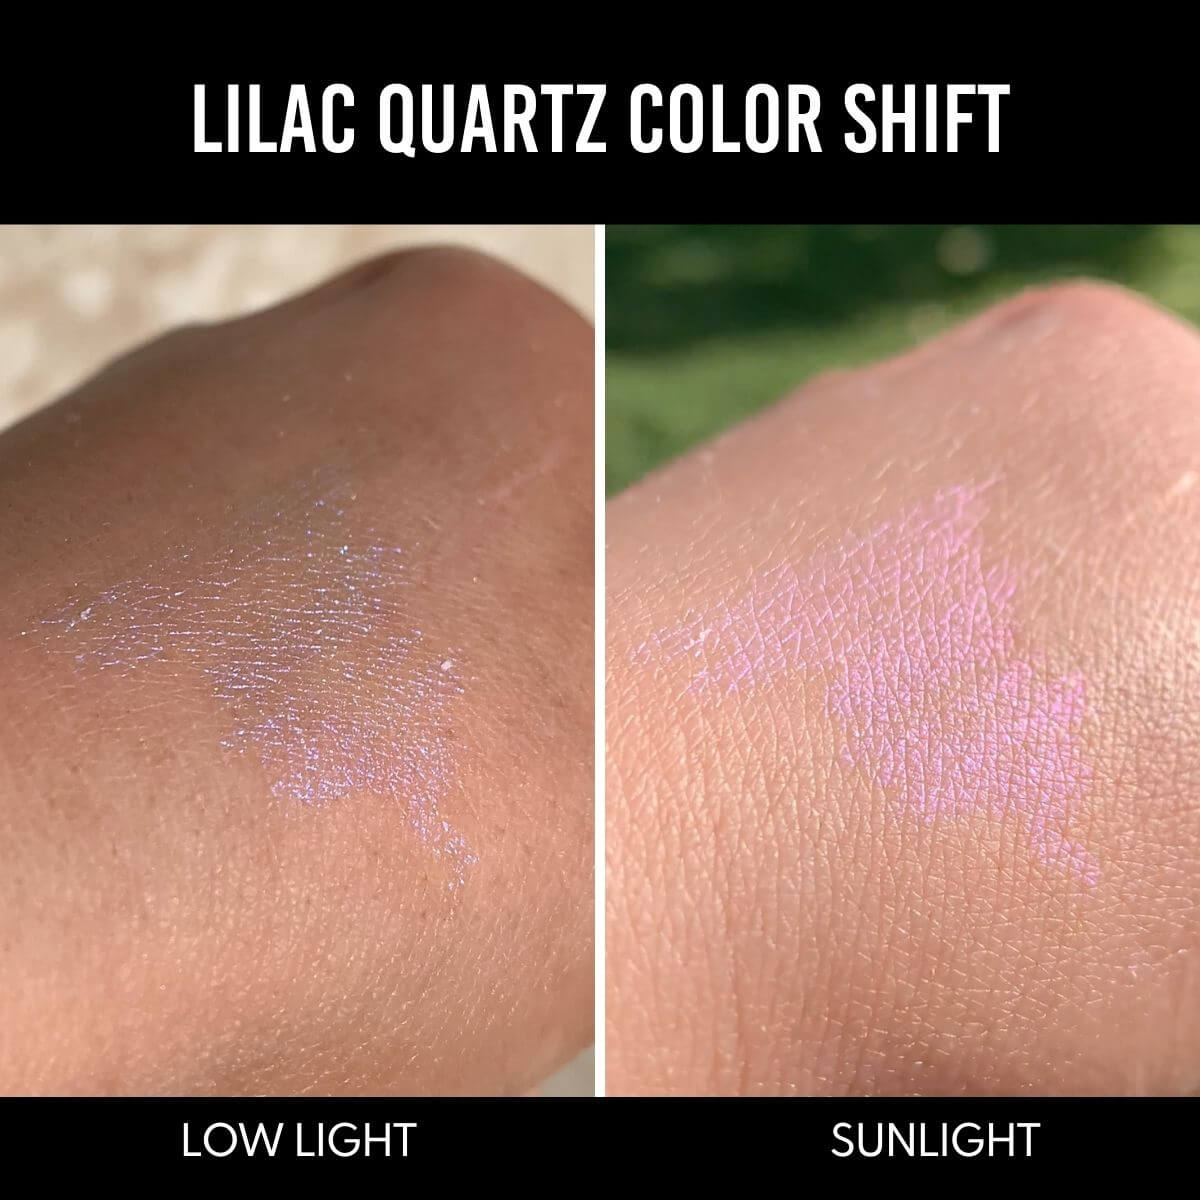 Lilac Quartz